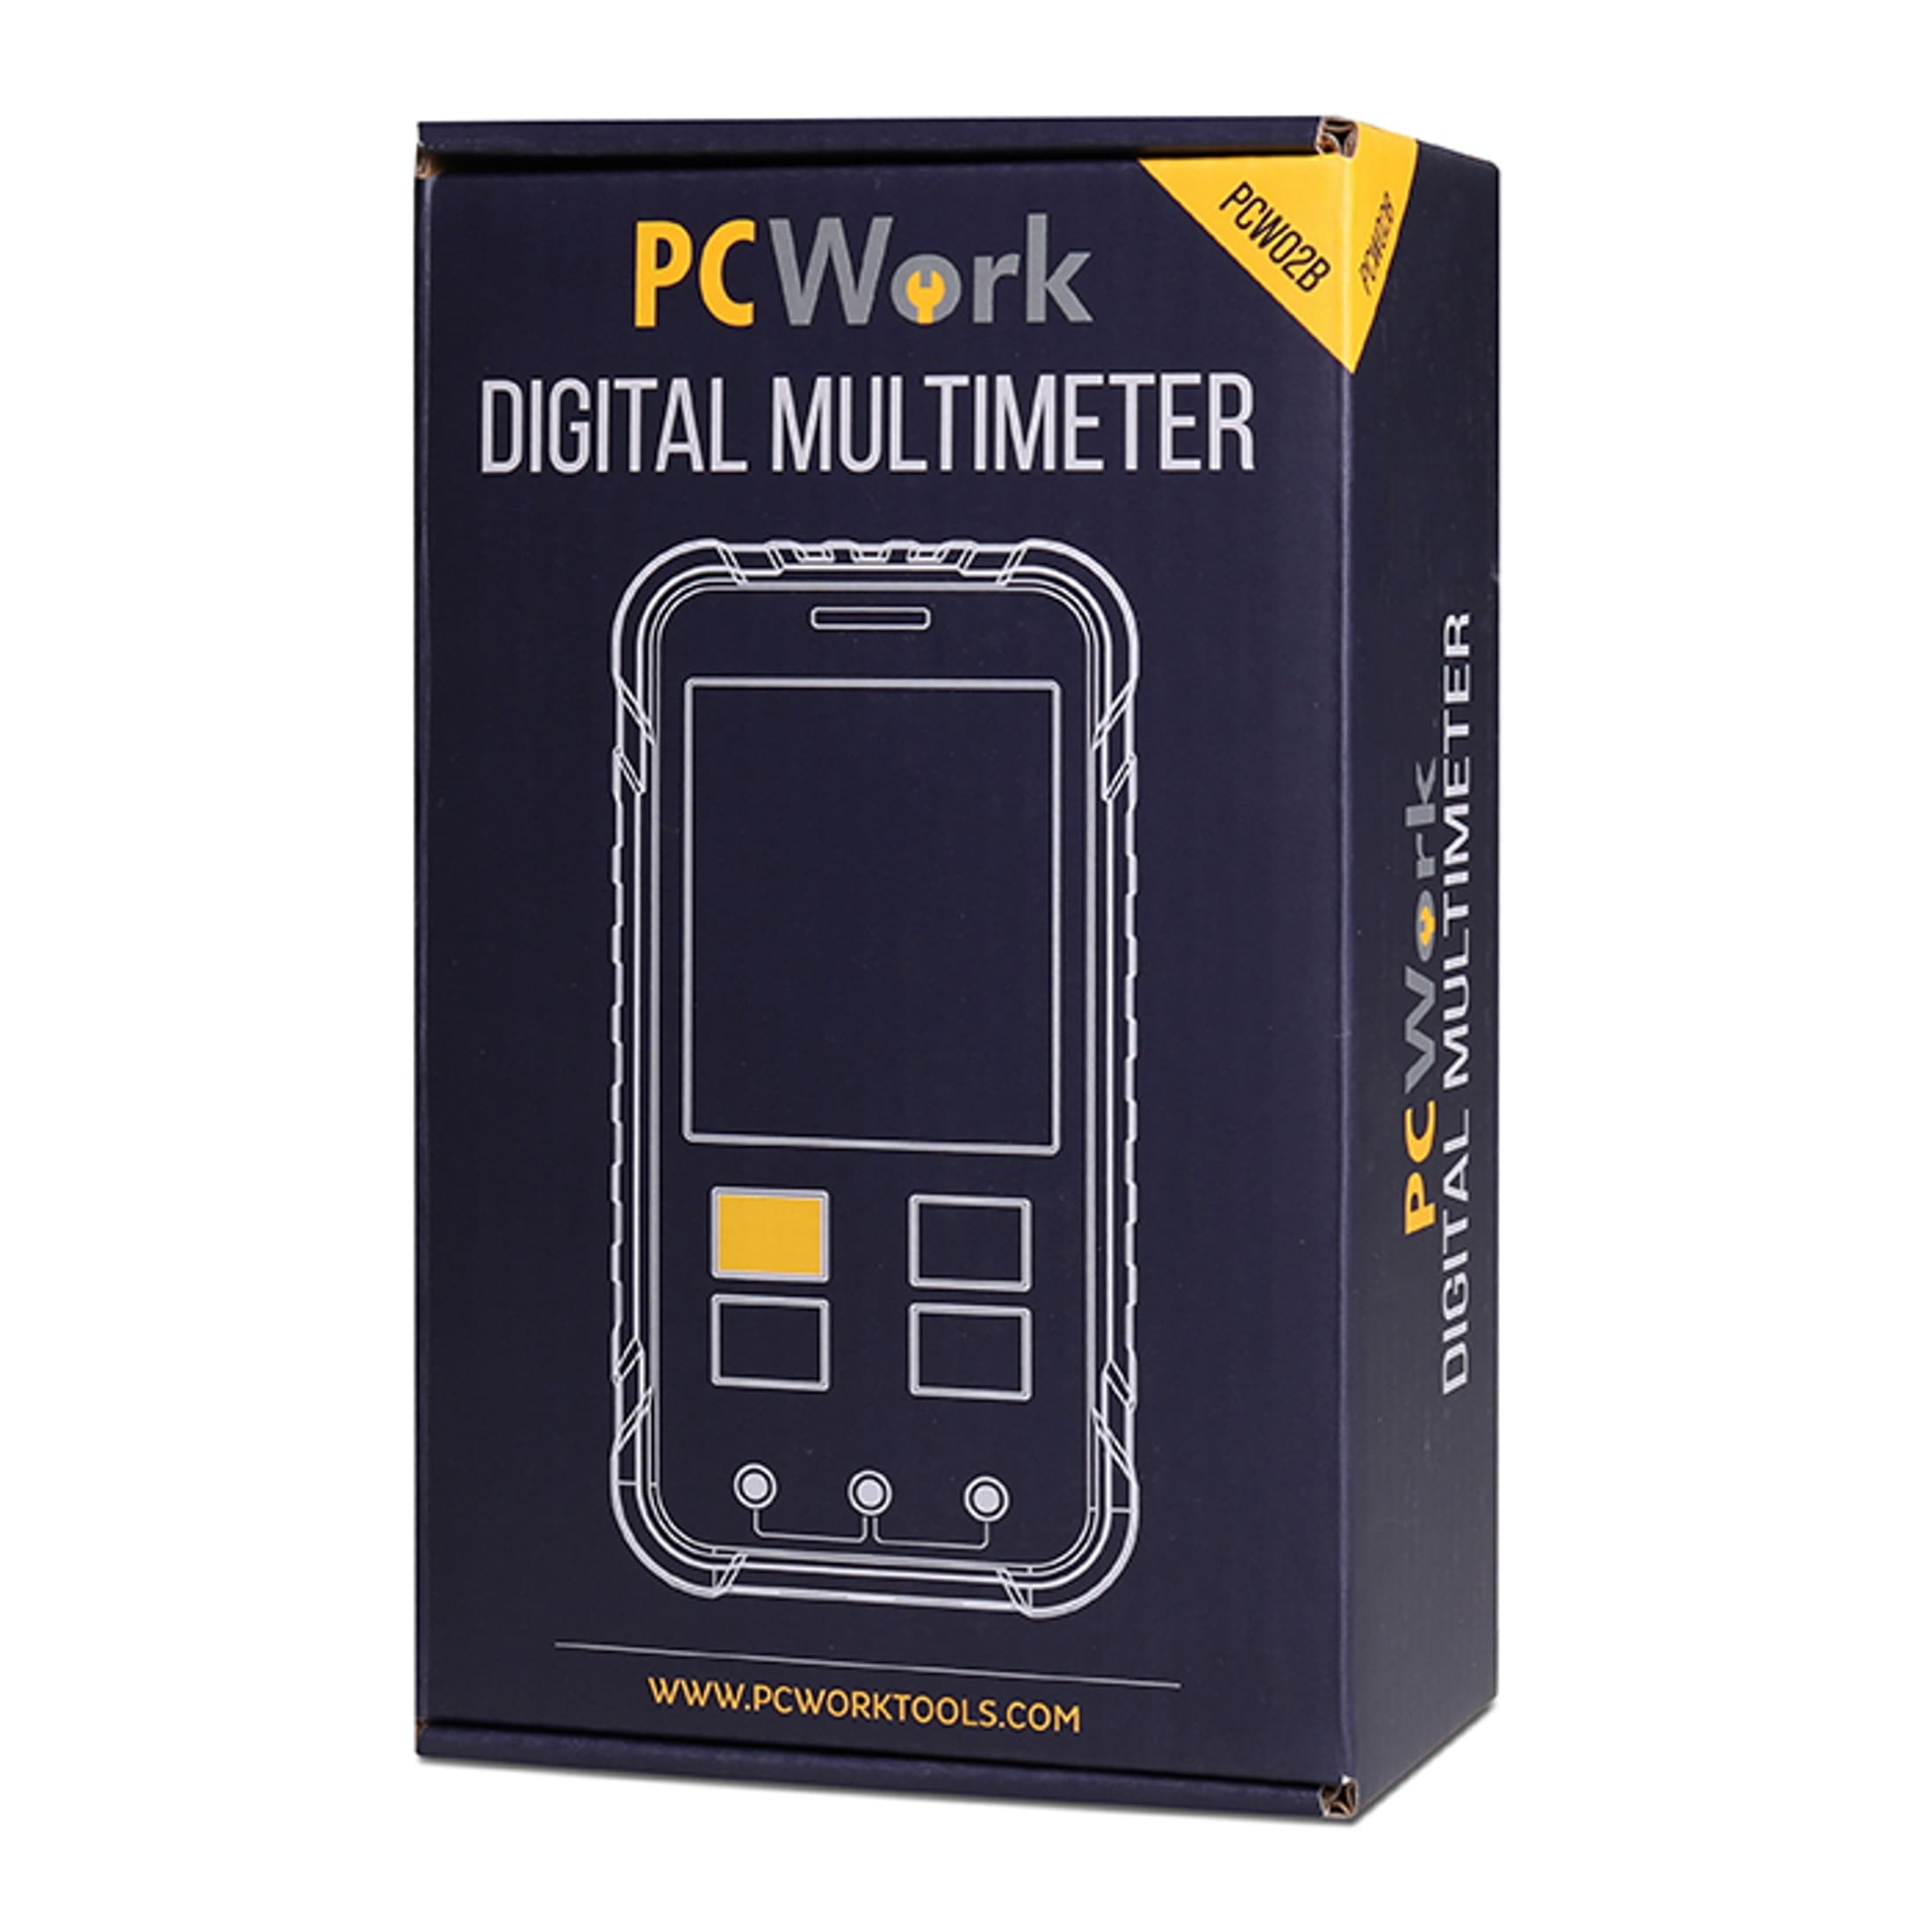 PCW02B Digitalmultimeter, digital, smart, True RMS